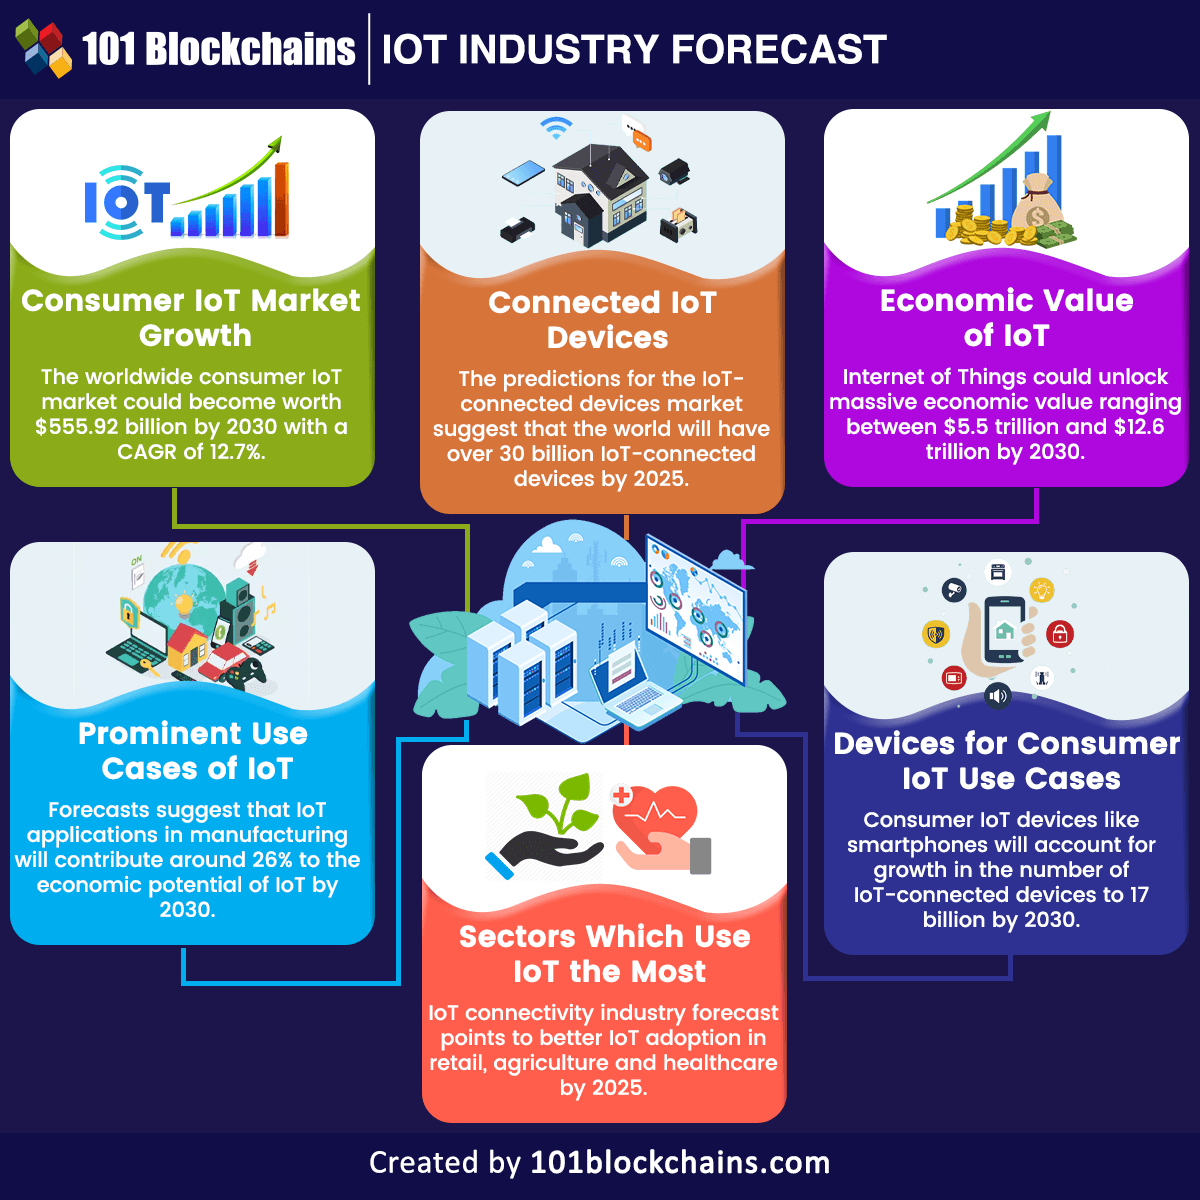 IoT Industry Forecast